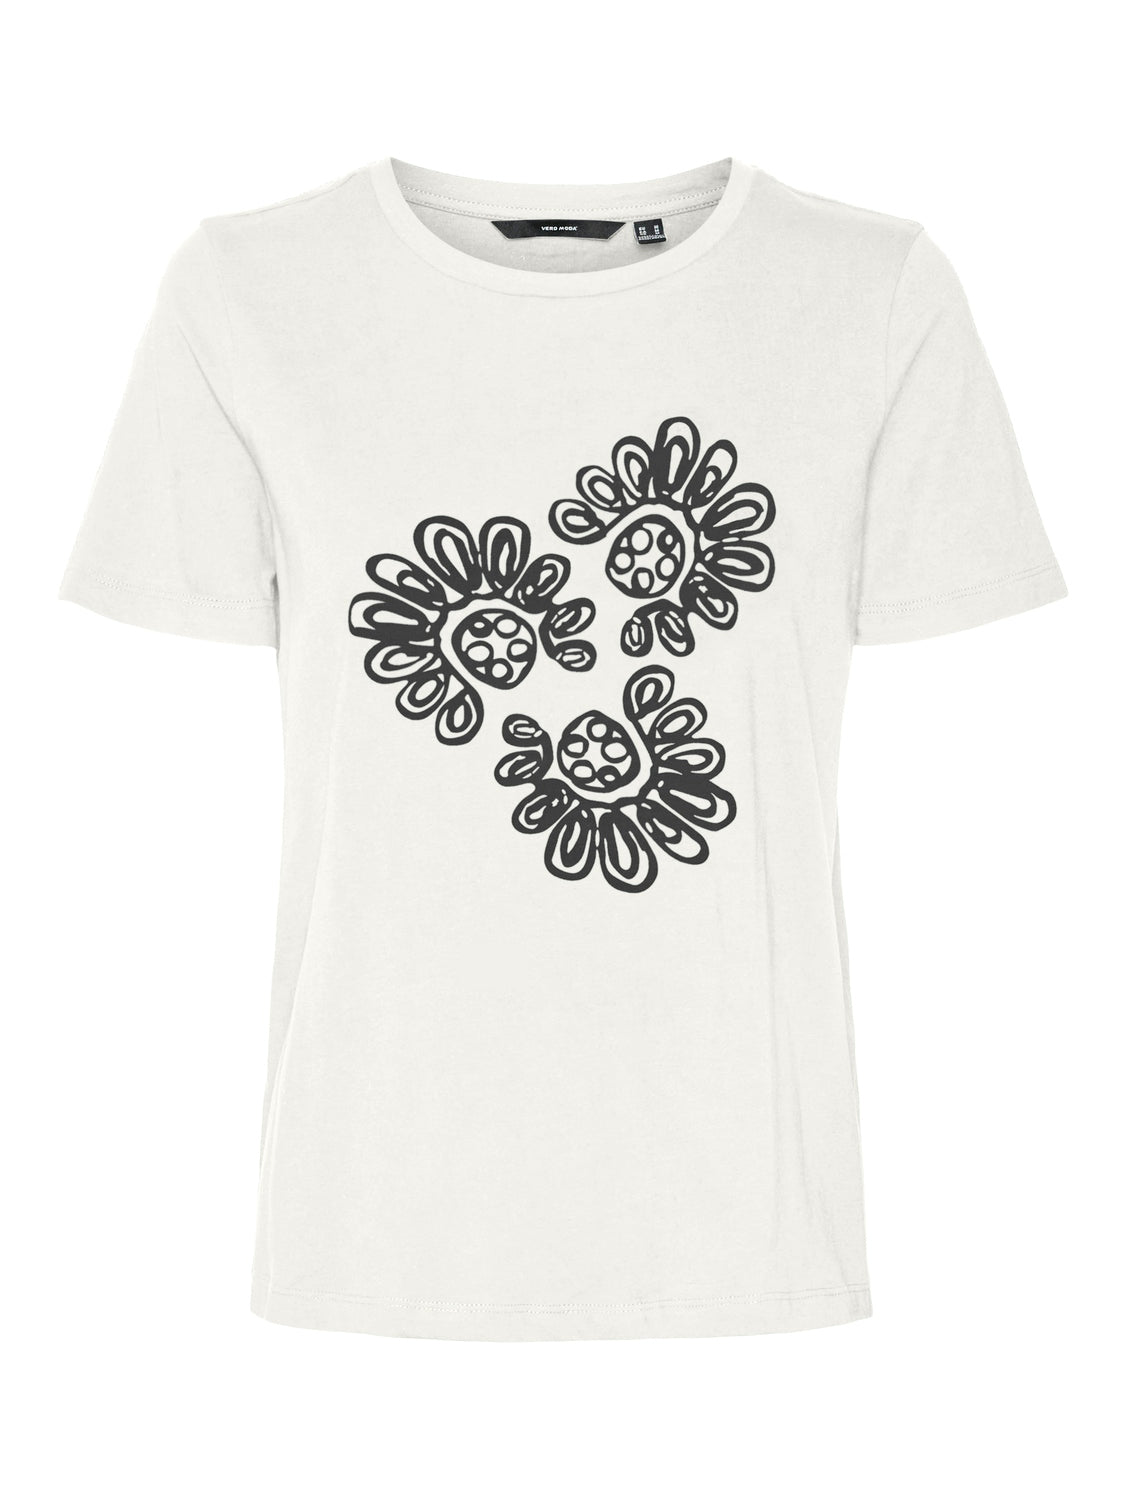 Vero Moda Flower Print T-Shirt in White